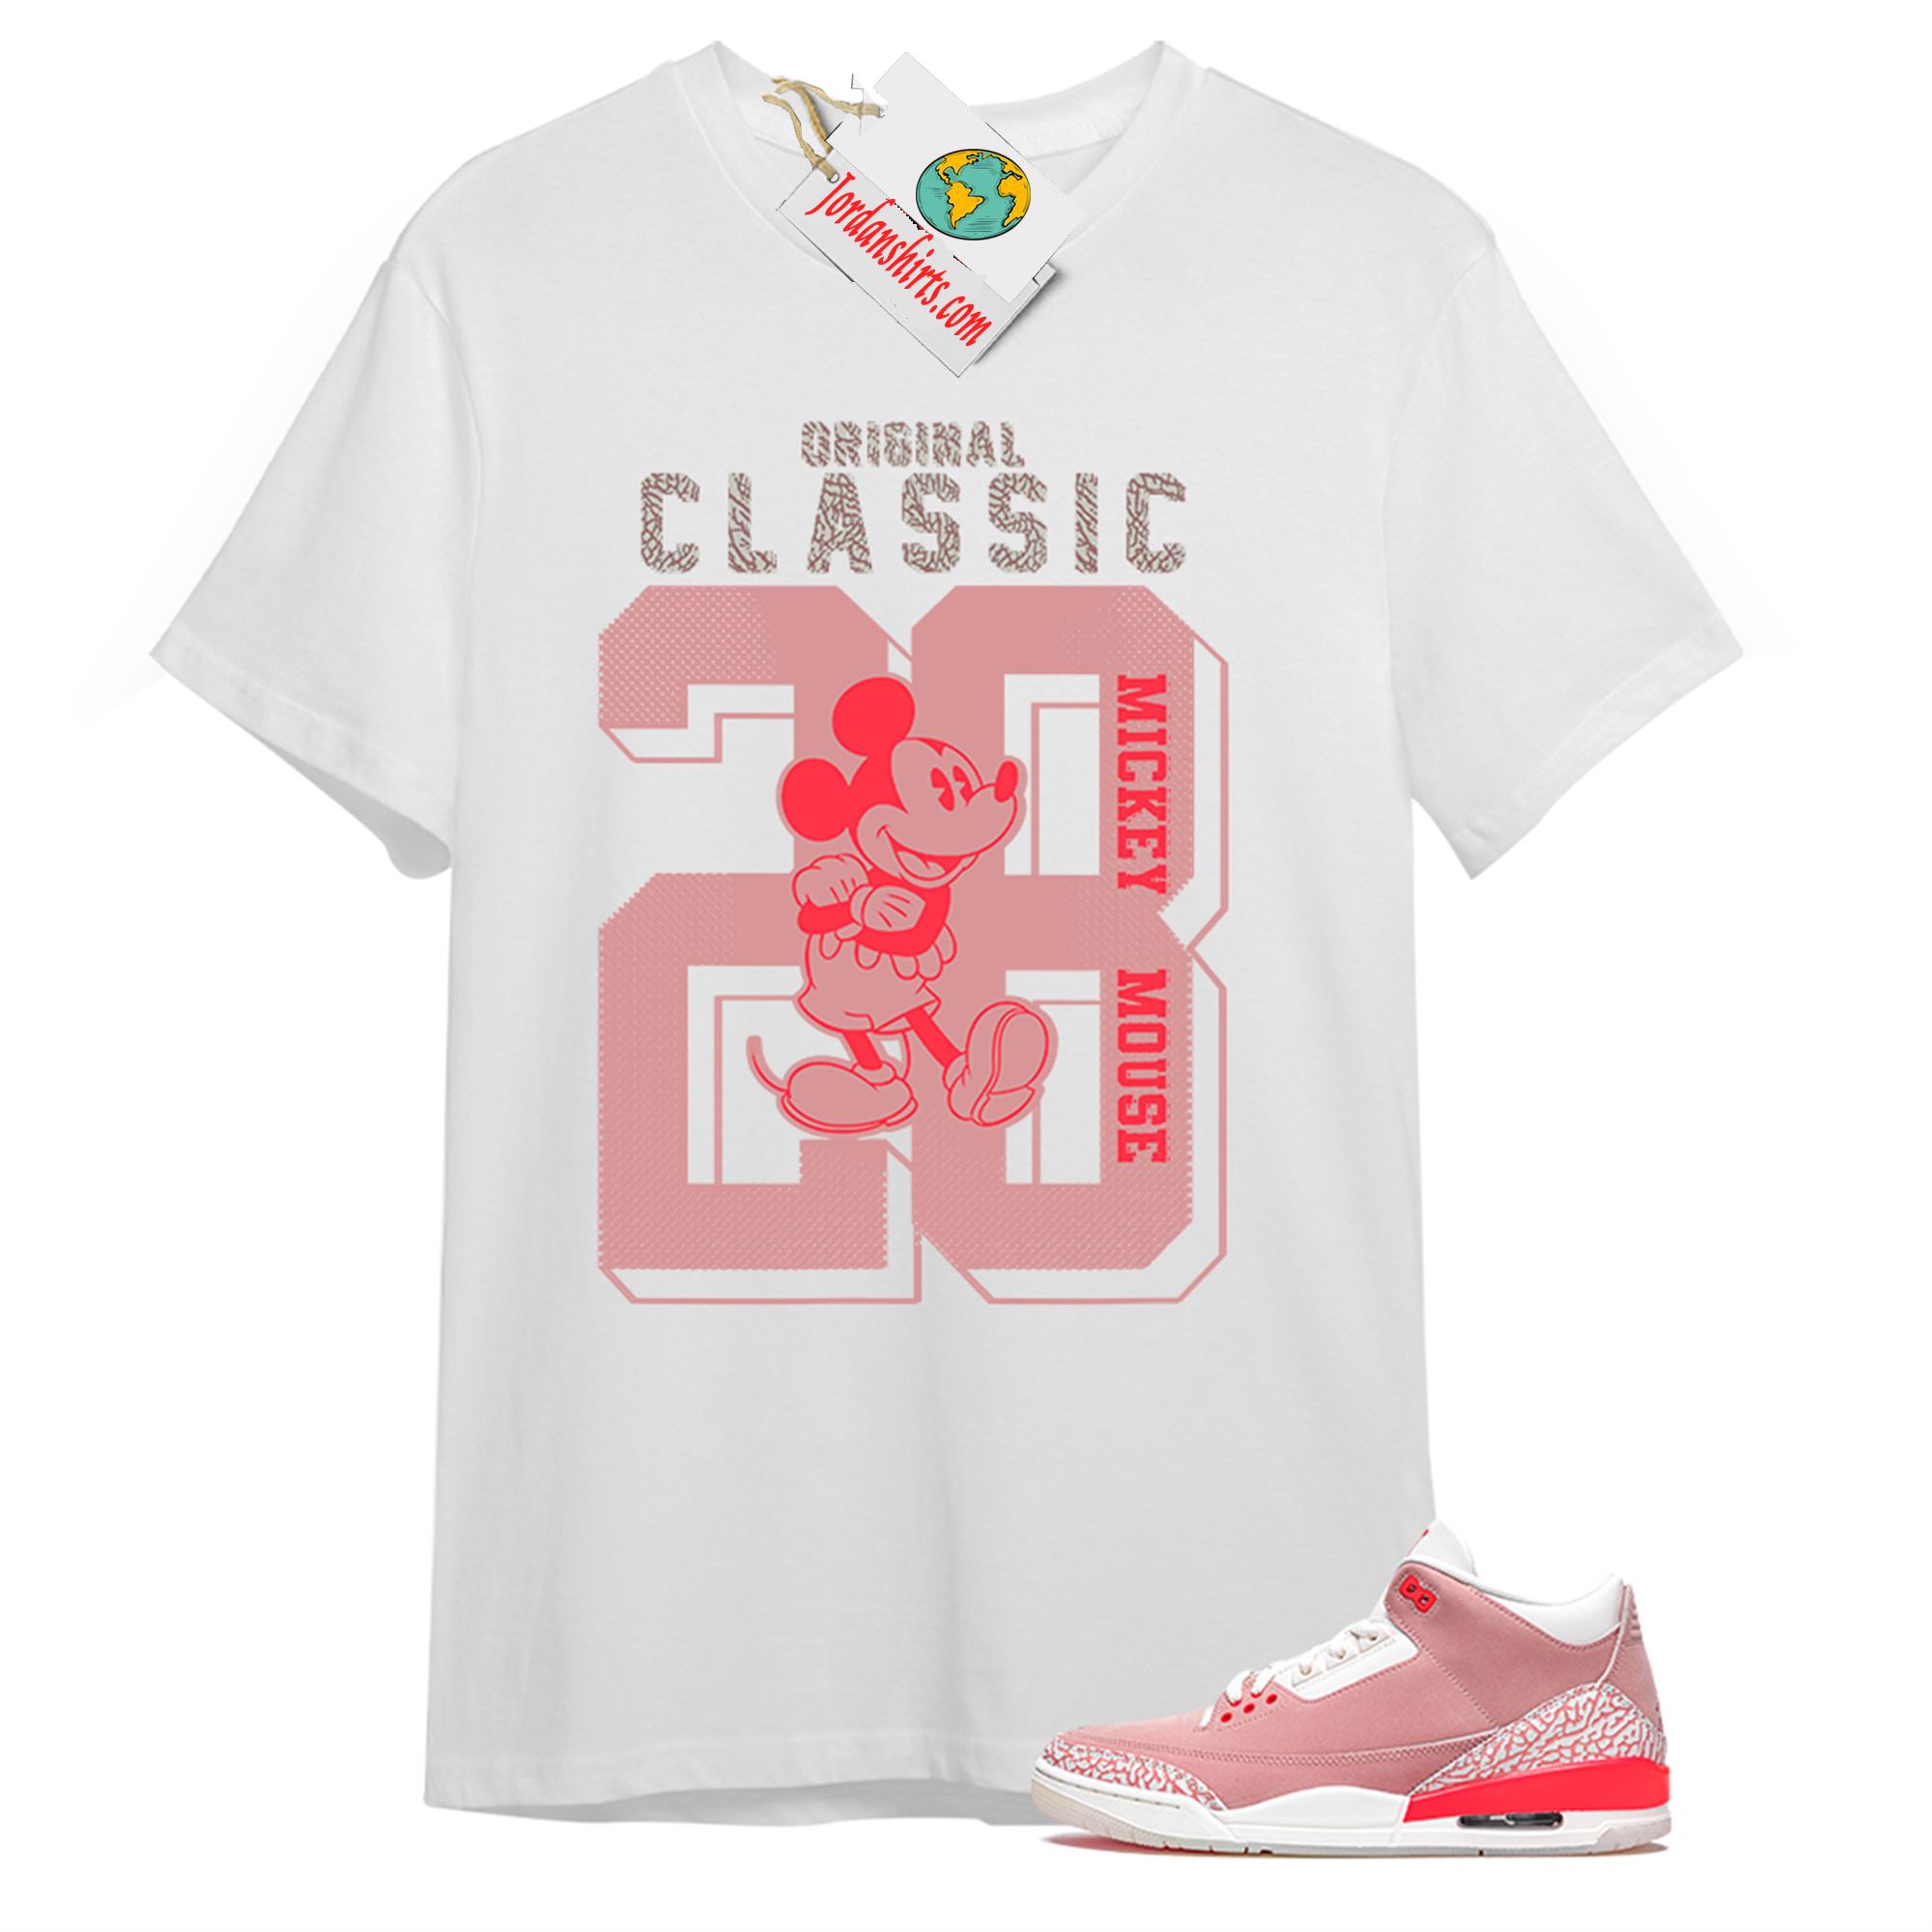 Jordan 3 Shirt, Disney Mickey Mouse Classic 28 White T-shirt Air Jordan 3 Rust Pink 3s Size Up To 5xl